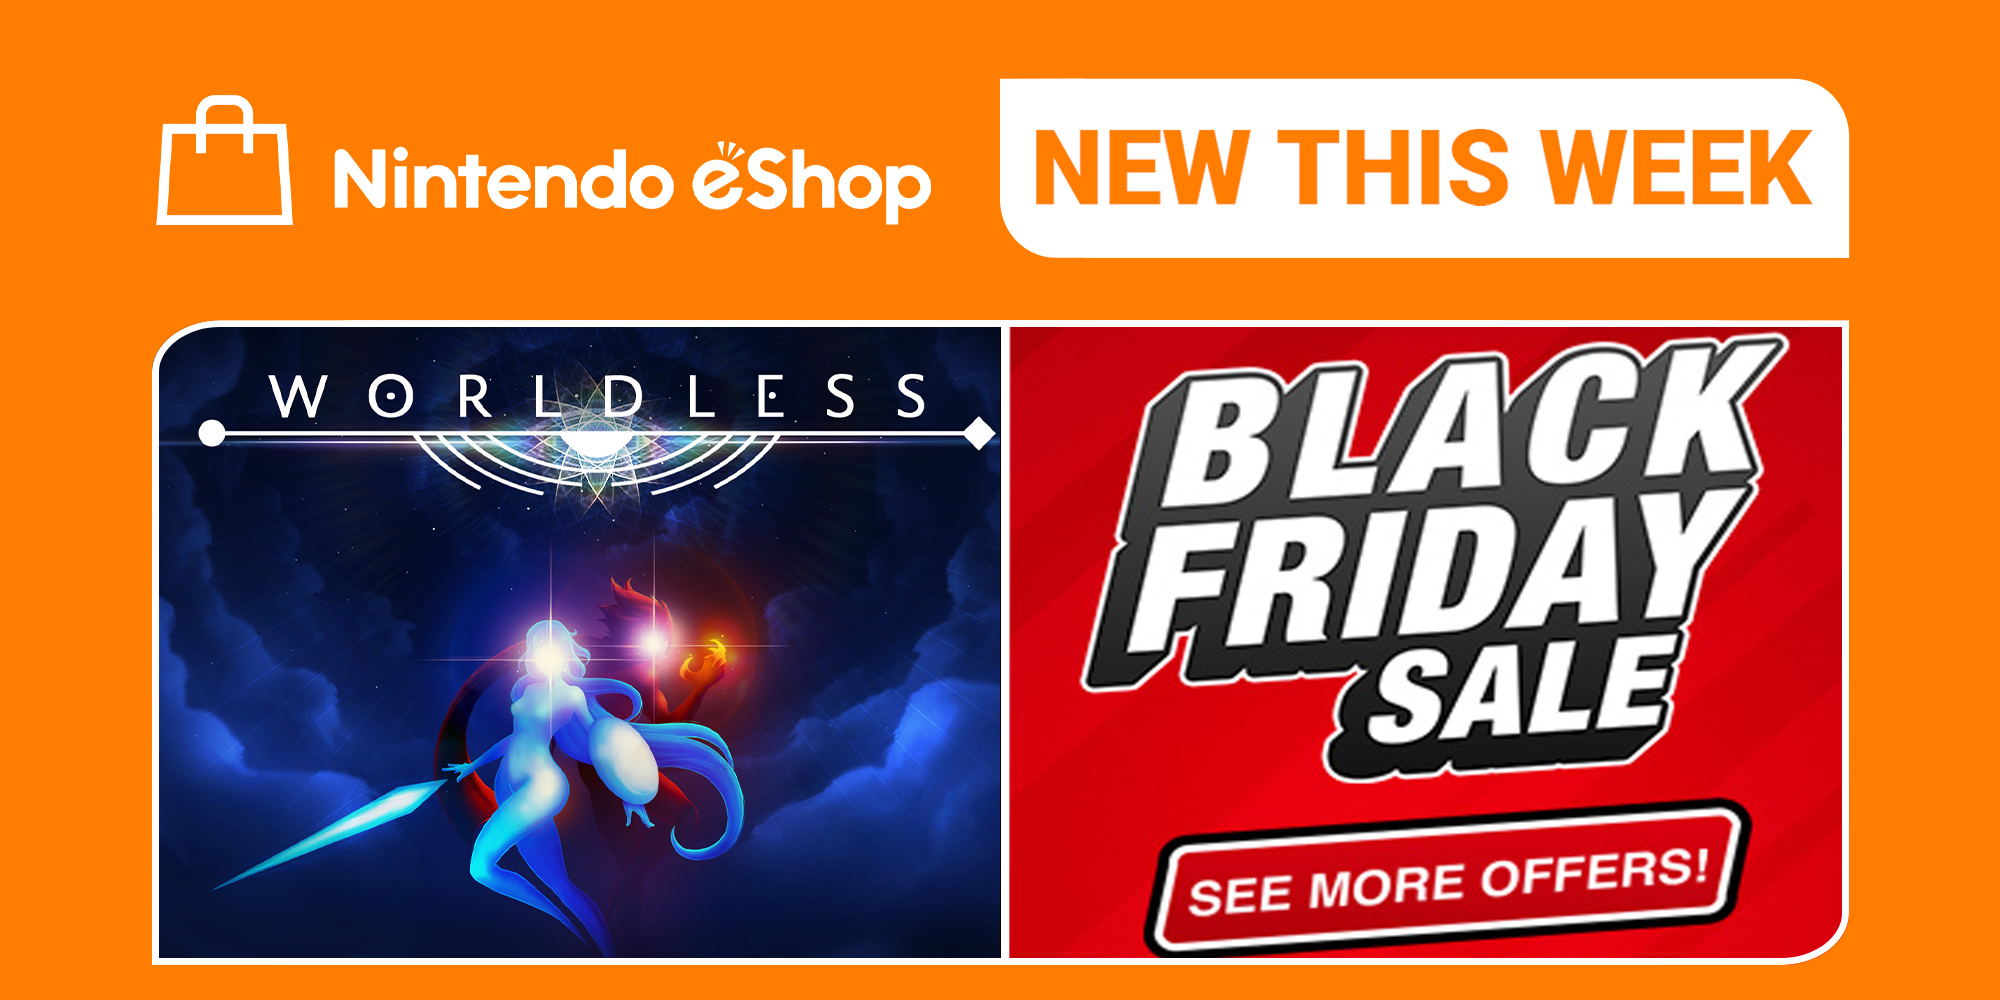 Europe: Nintendo eShop Black Friday sale now live - My Nintendo News